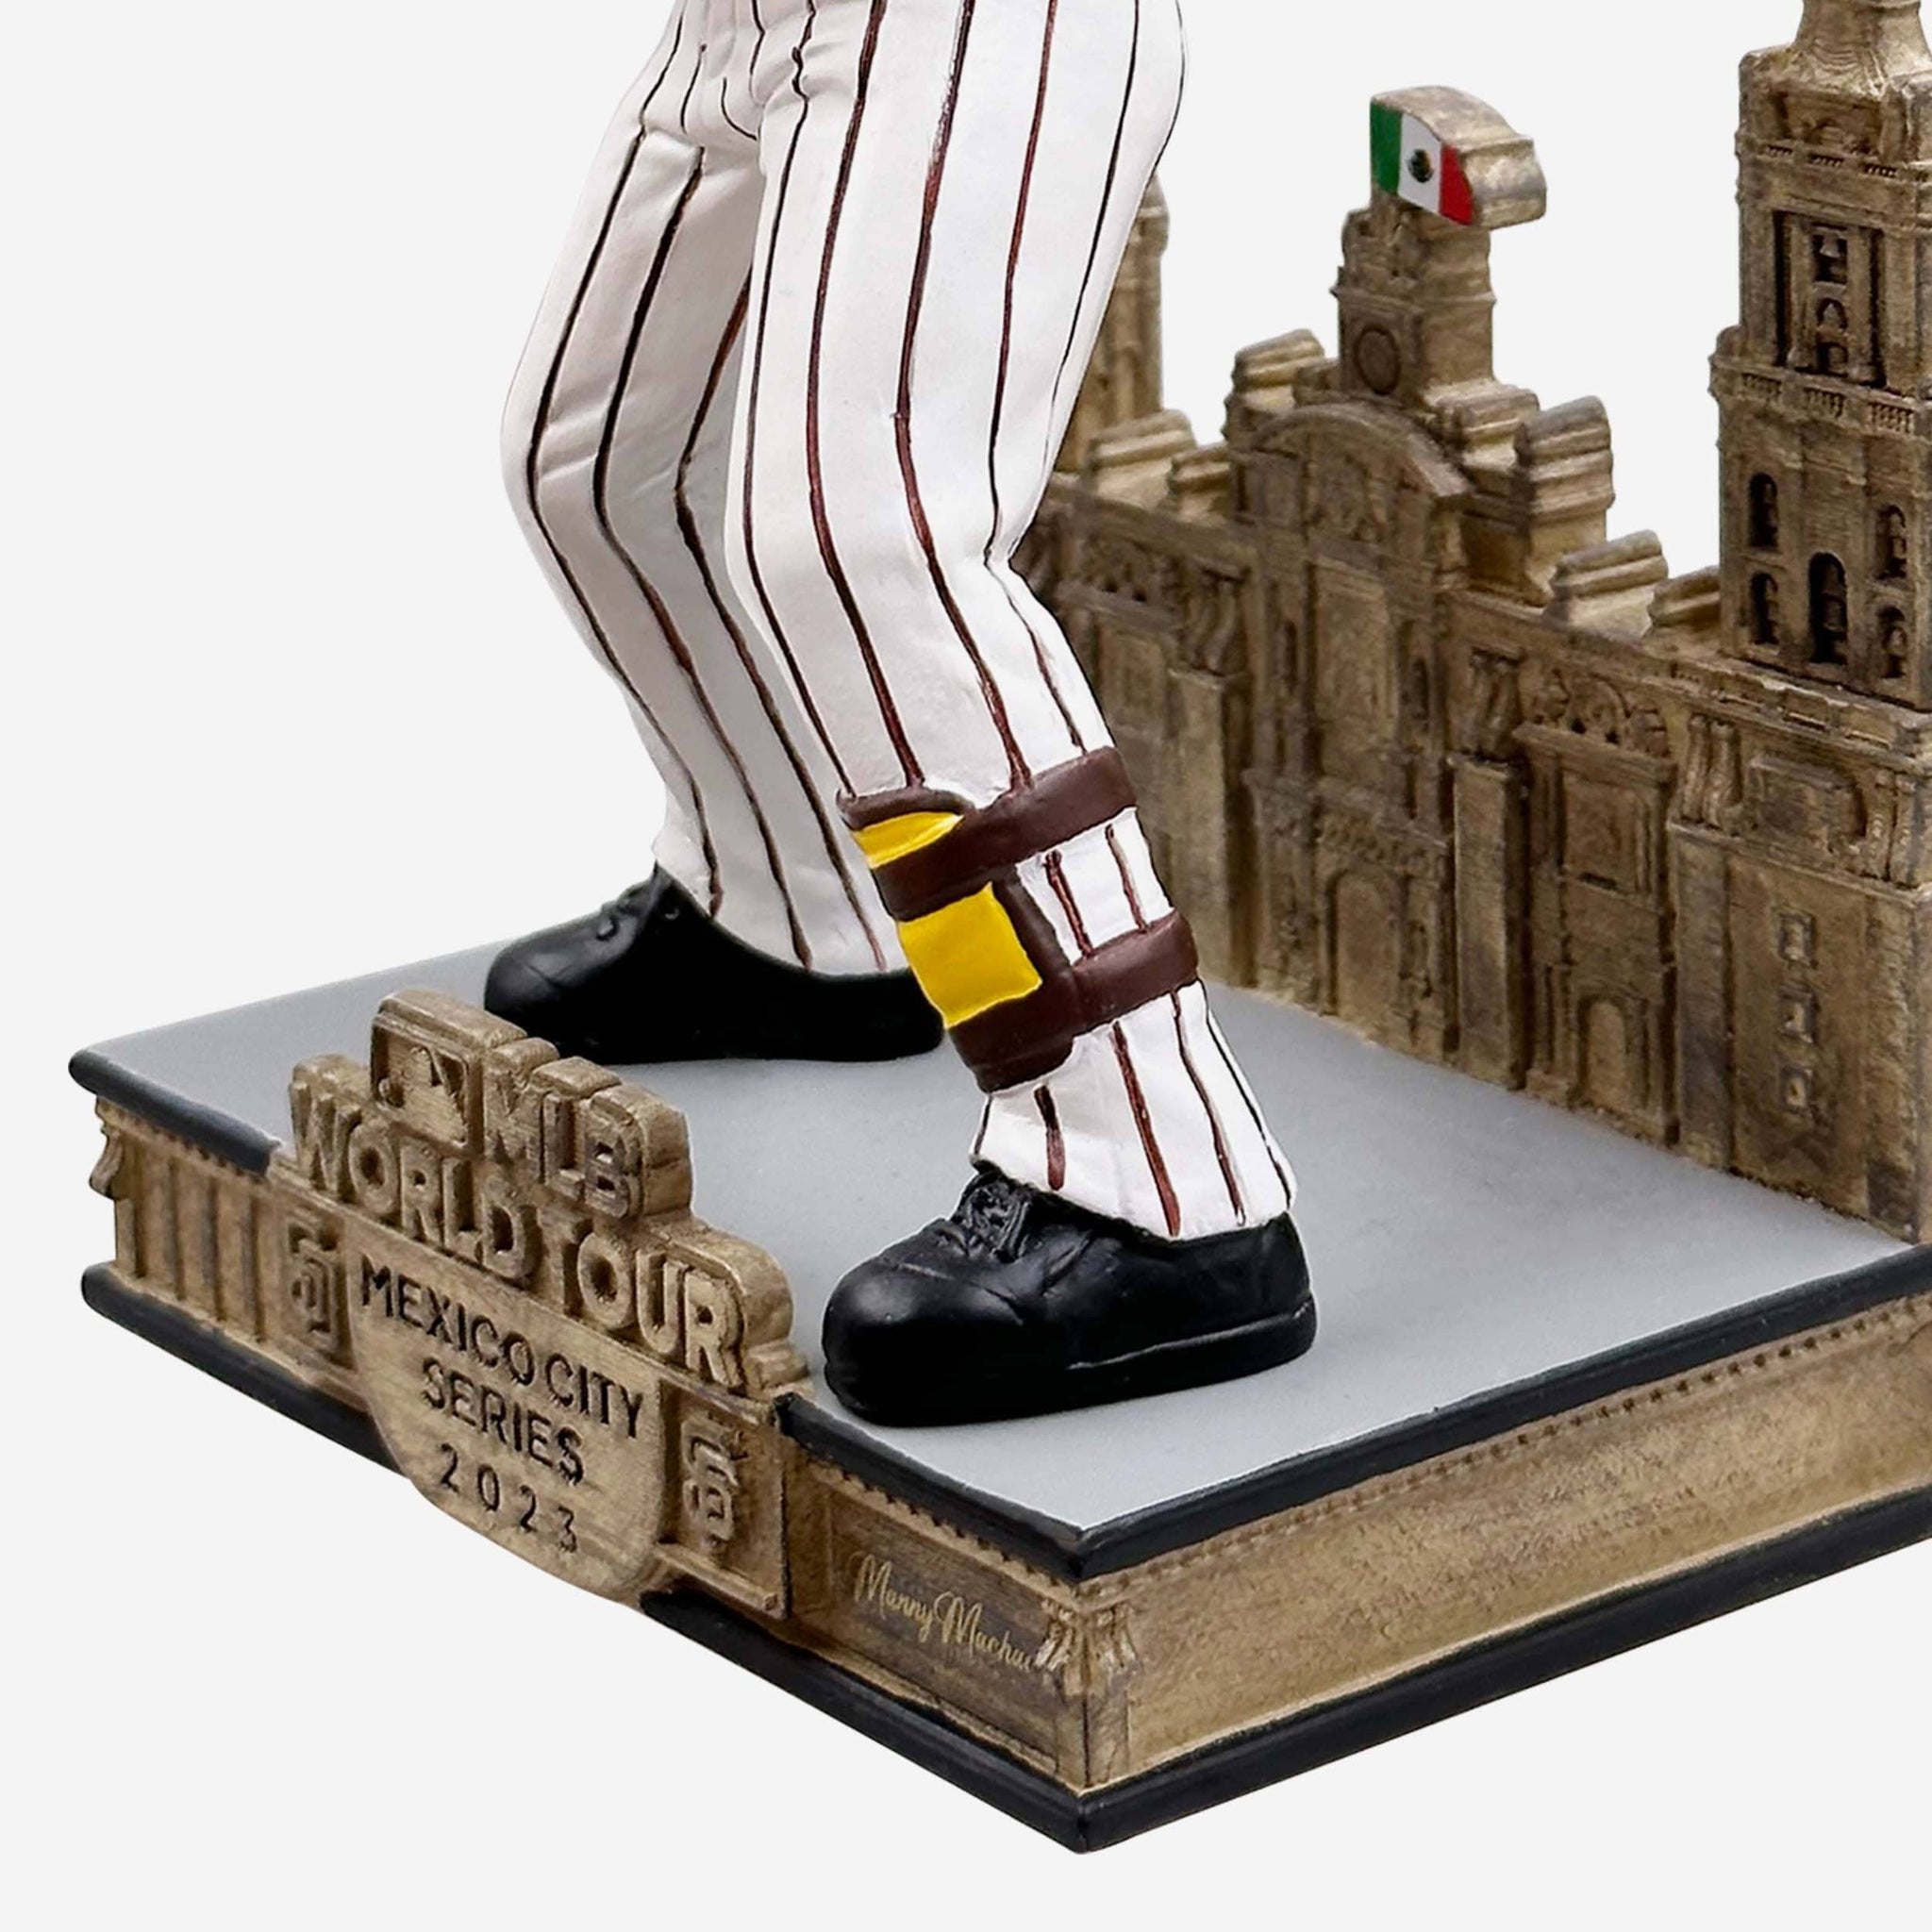 MLB Baltimore Orioles Manny Machado Eekeez Mini-Figure